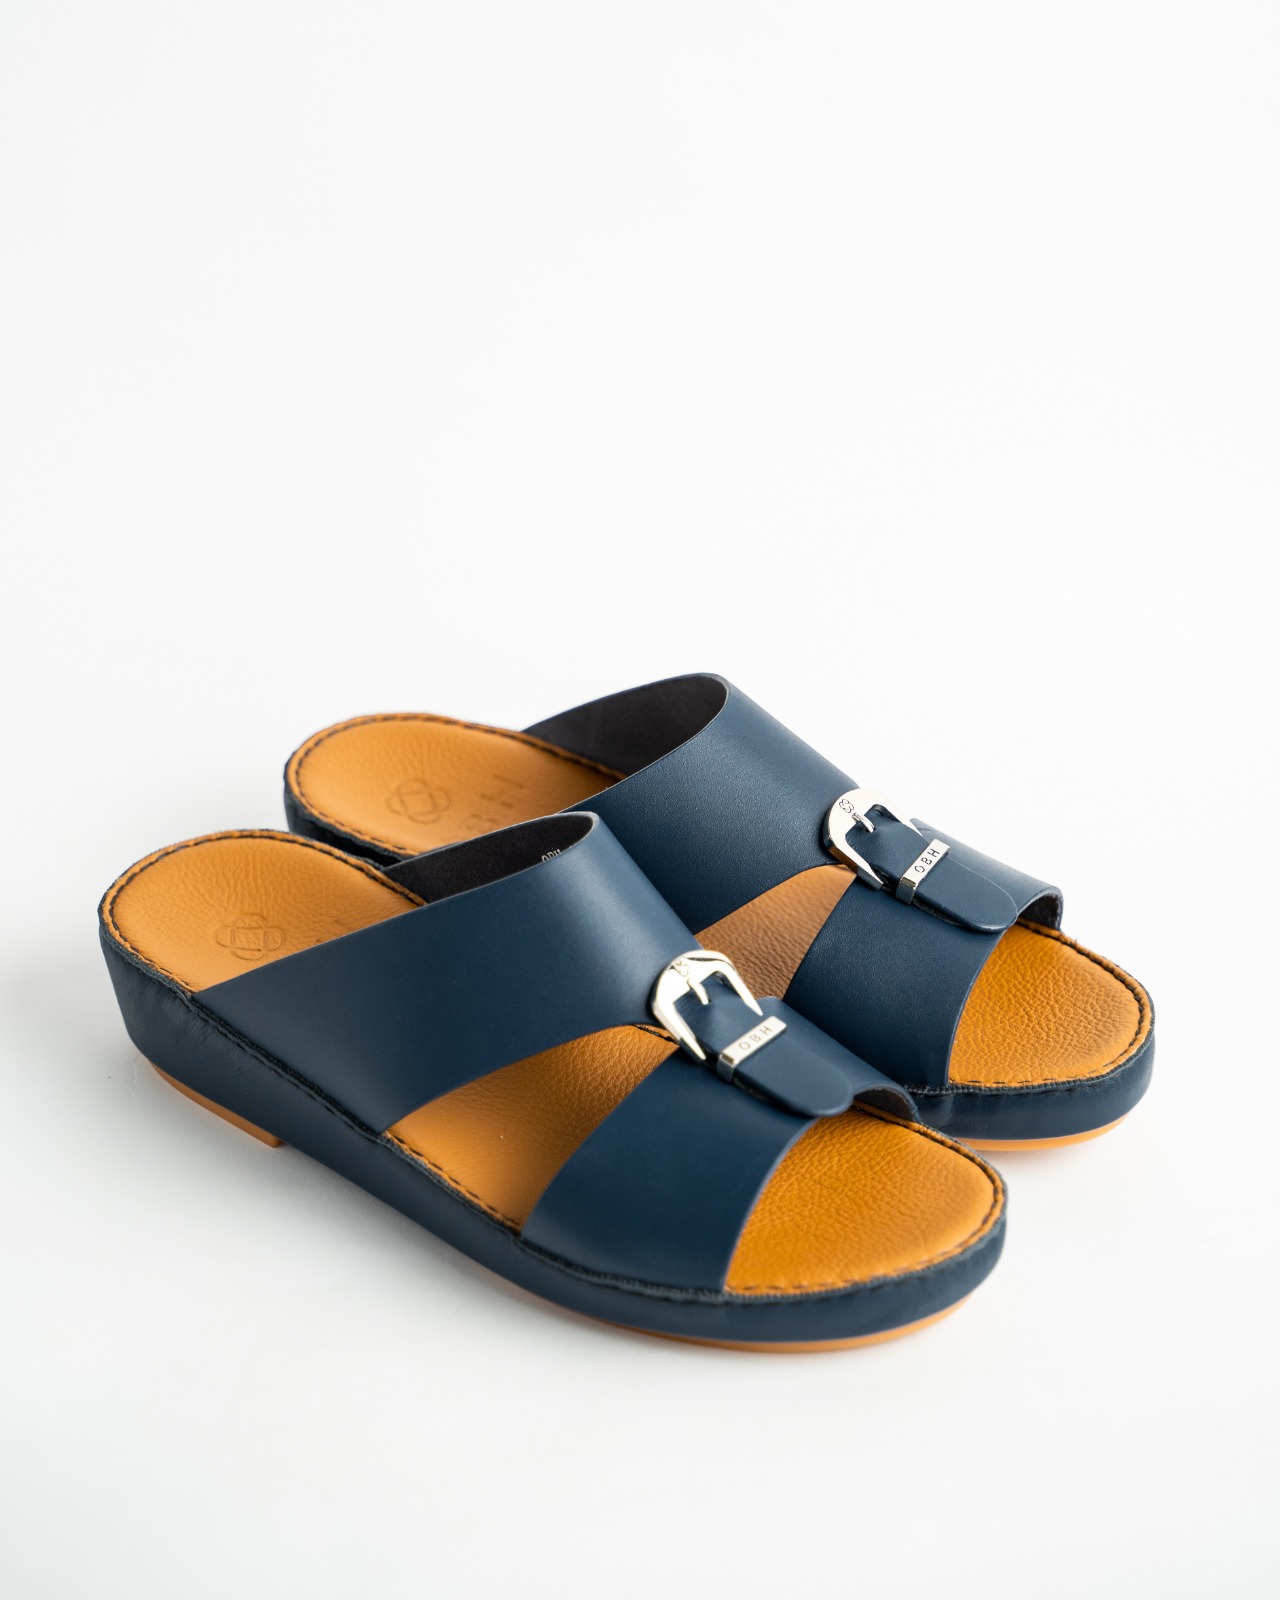 Buy OBH Men Sandals Model 14 Navy Color Online in UAE | OBH Collection